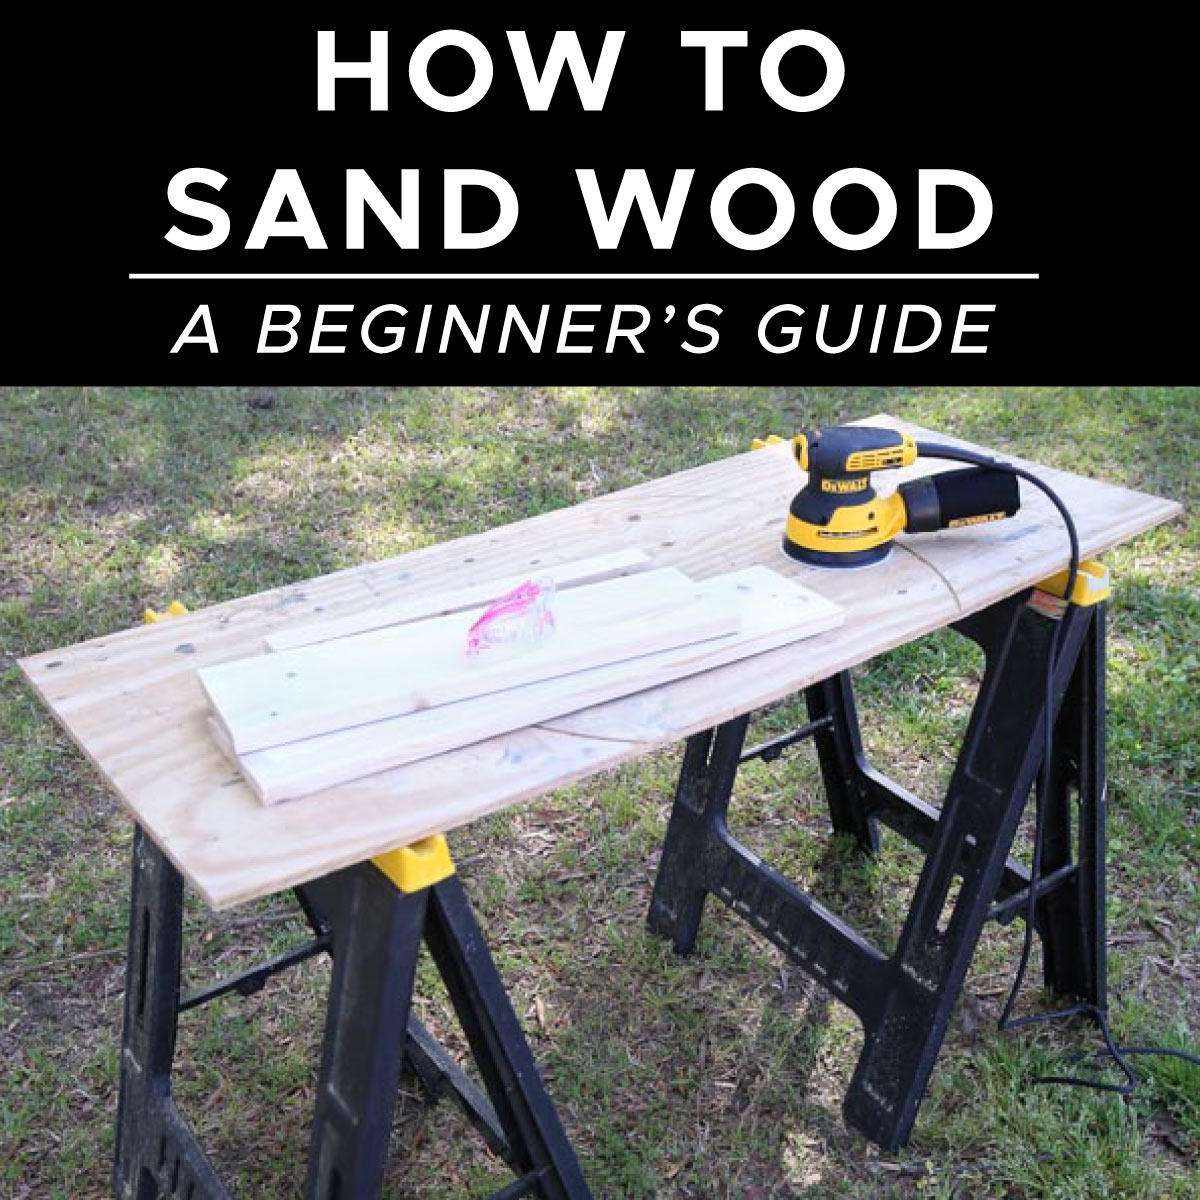 Proper Wood Preparation & Sanding Tips